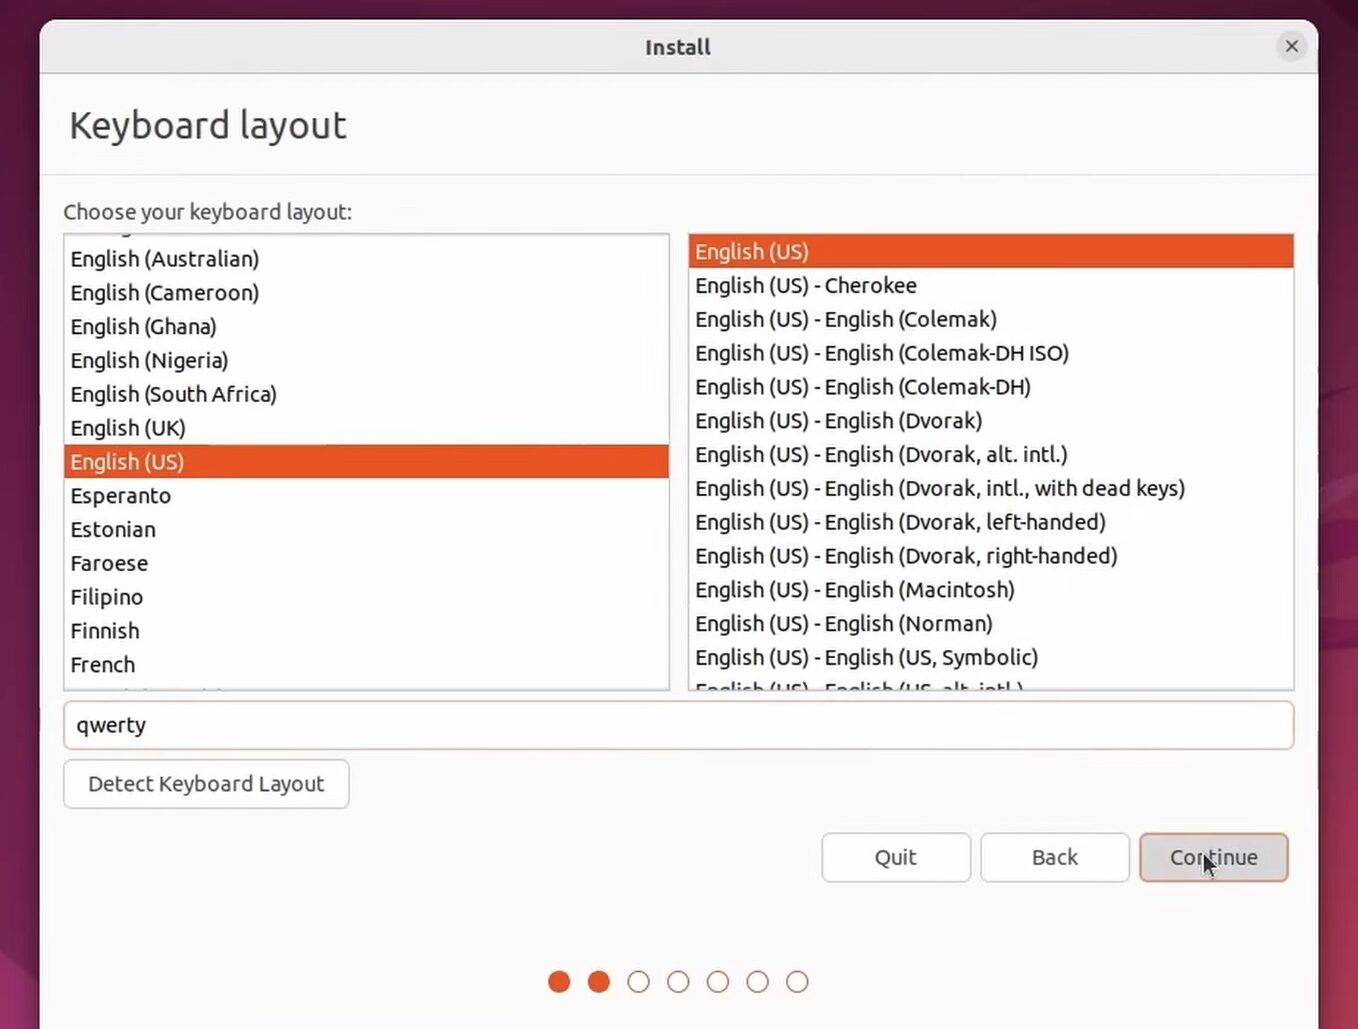 Installing Ubuntu 3